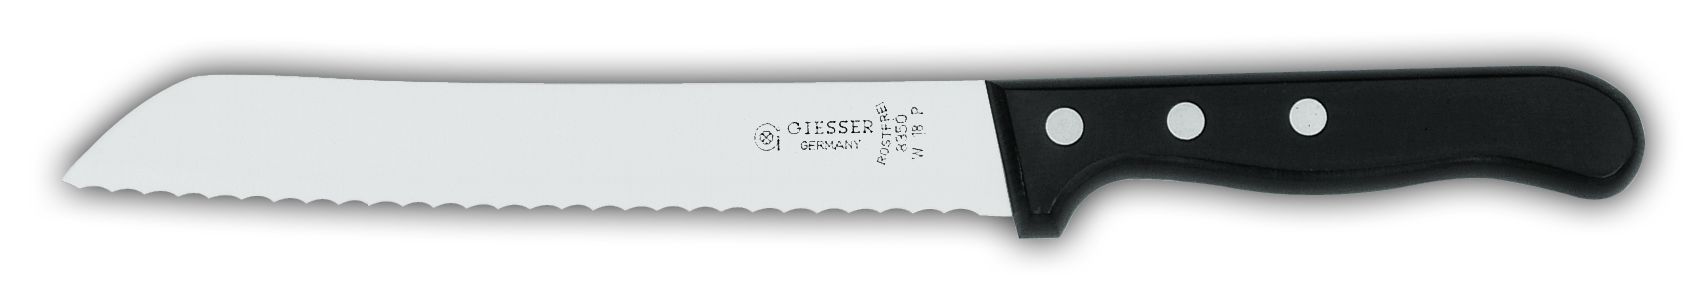 Нож для хлеба 8350wp  рукоятка из РОМ, 24 см,  черная рукоятка